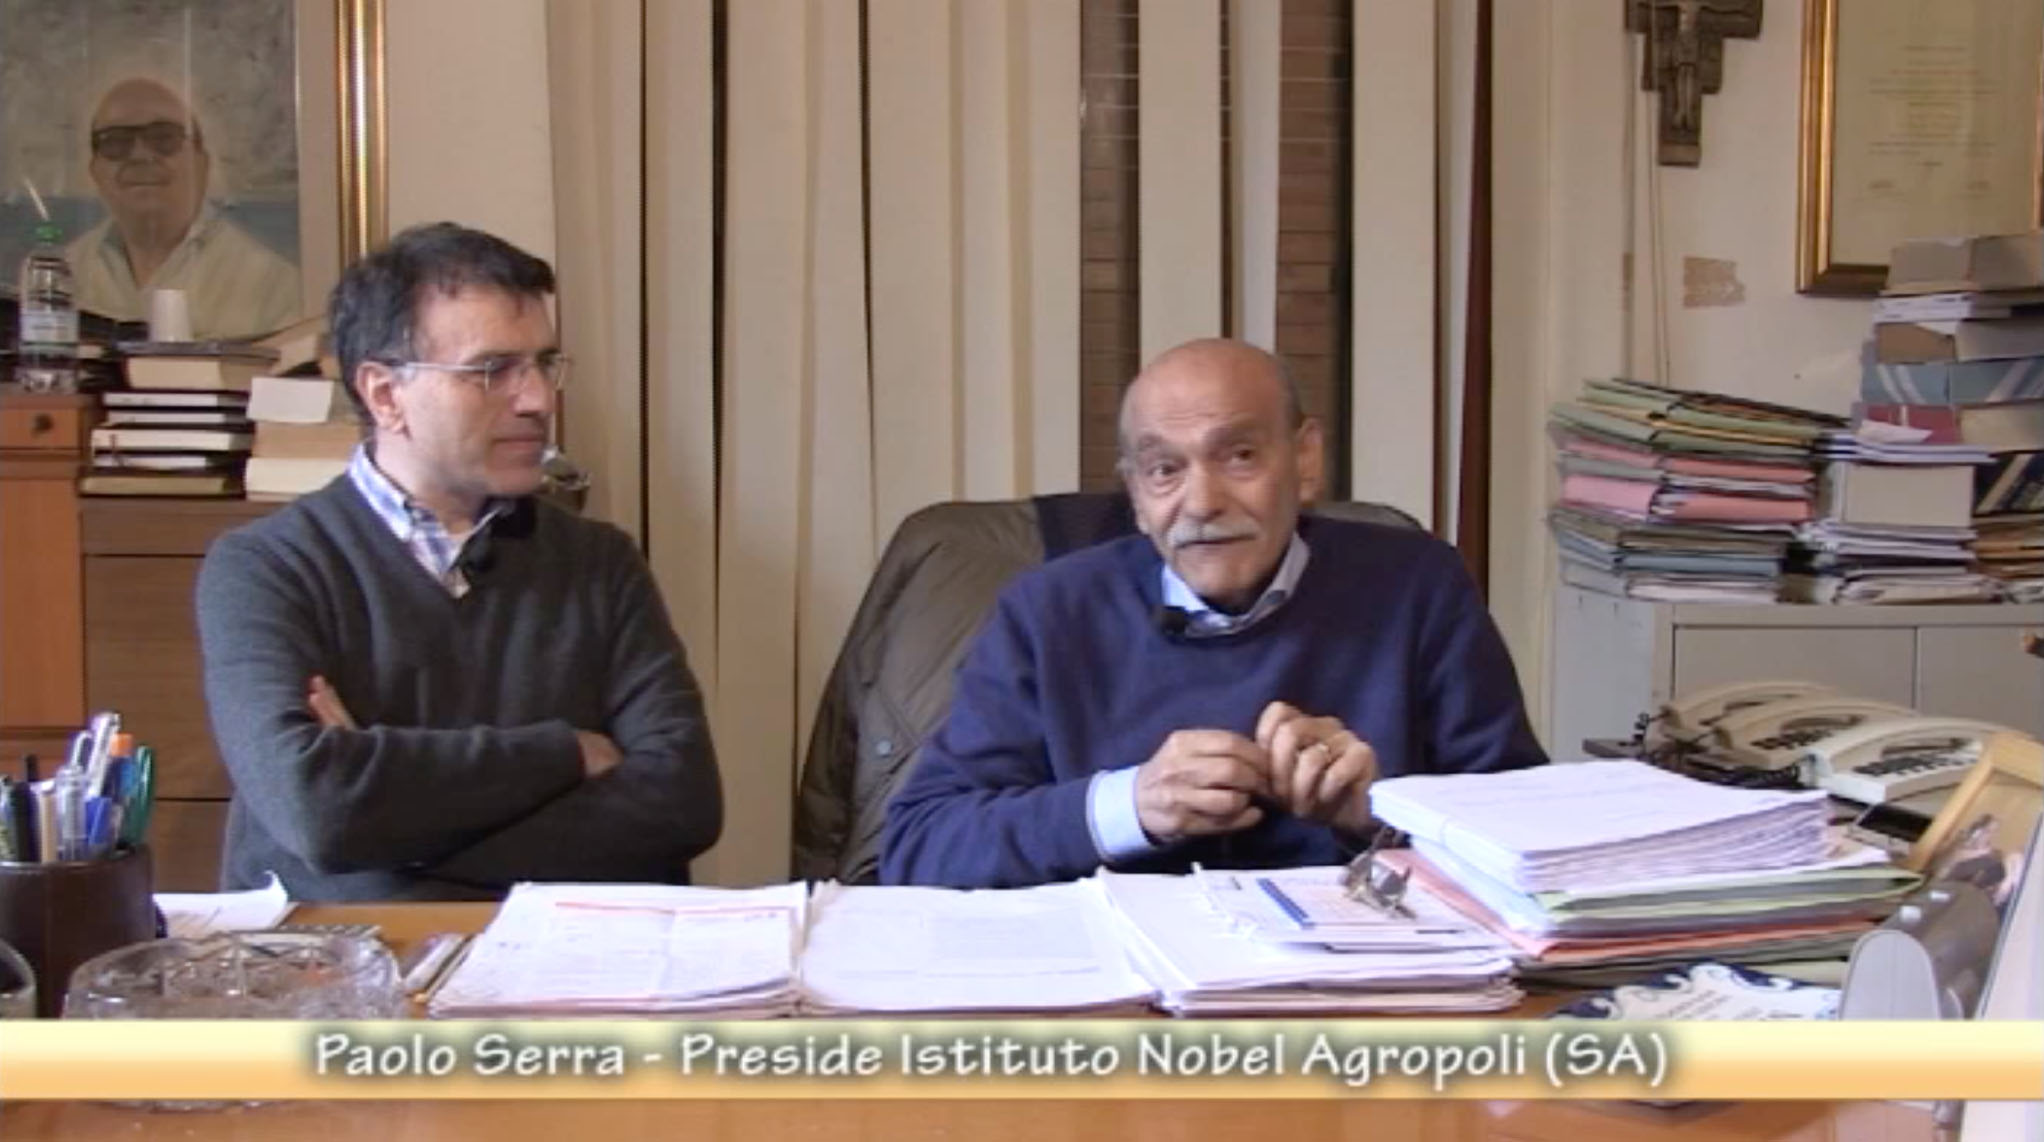 Paolo Serra - Preside Istituto Nobel, Agropoli (SA)